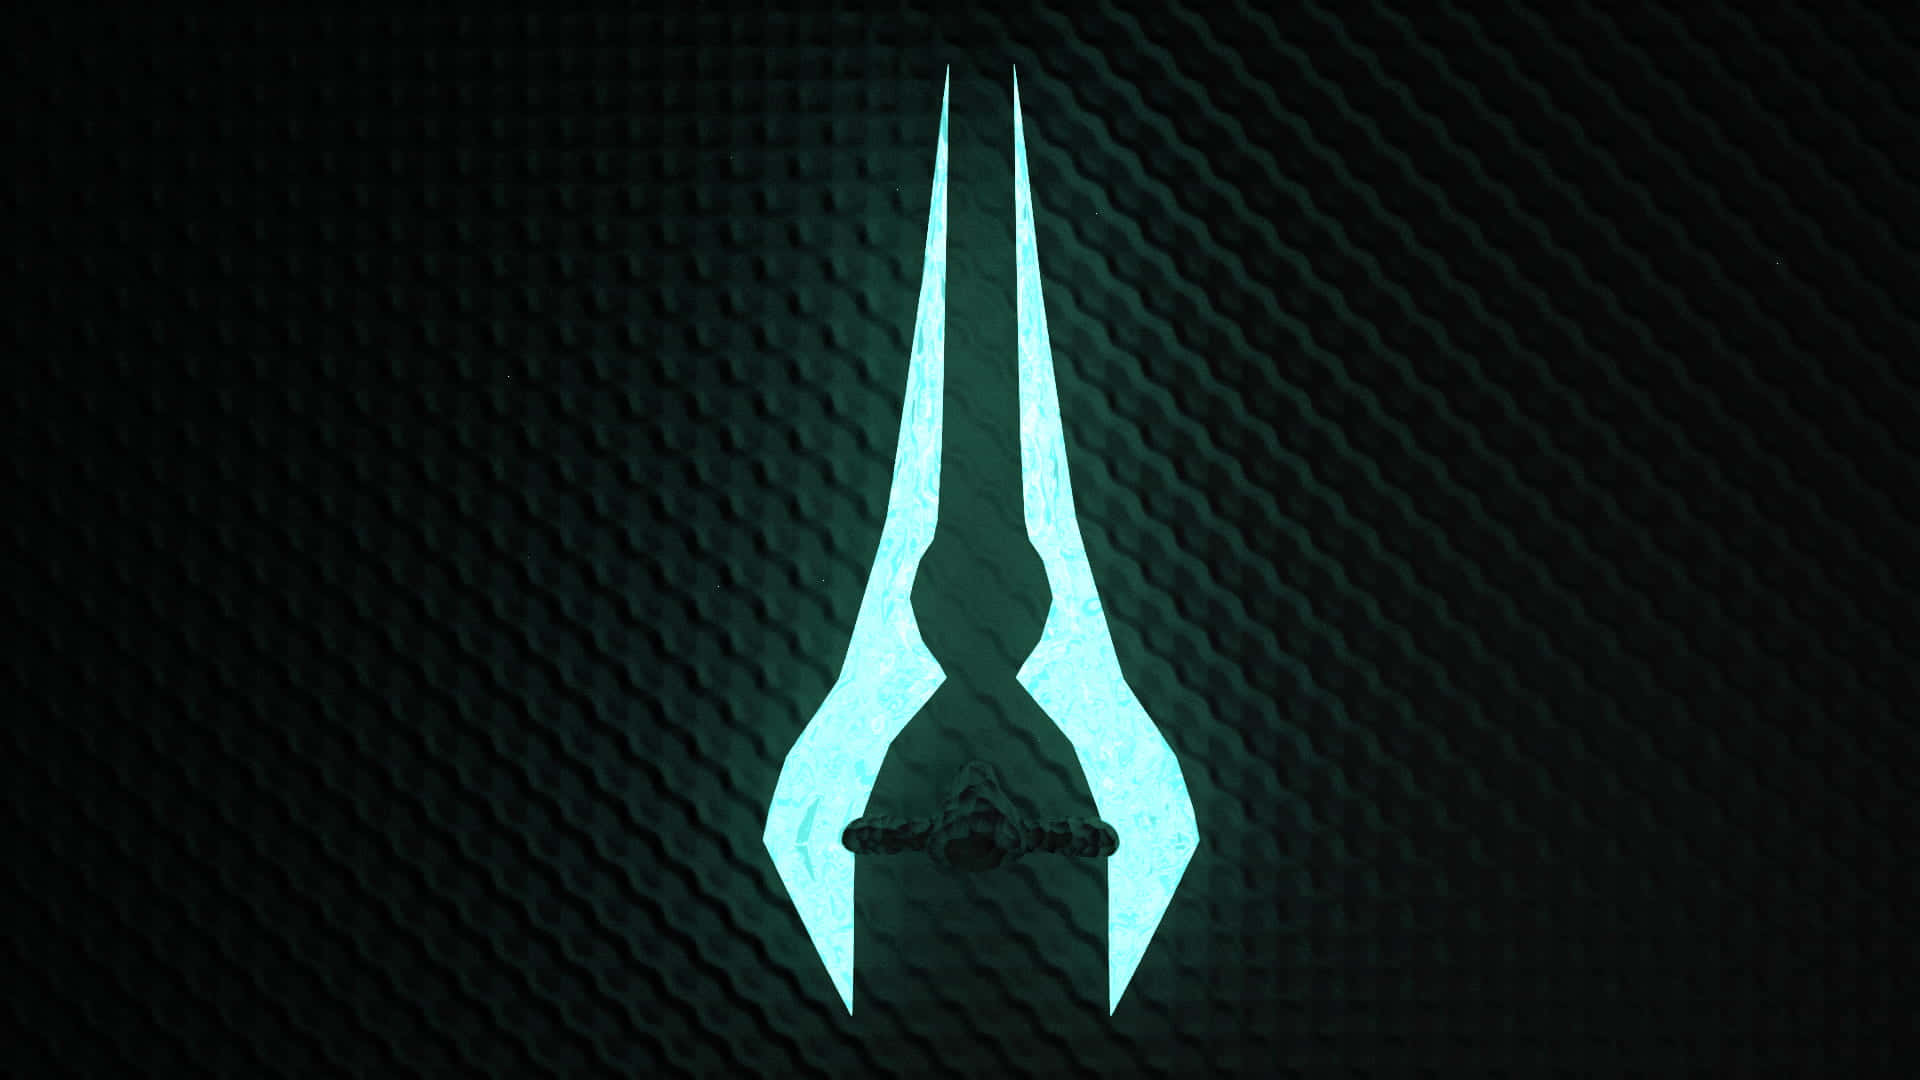 Stunning Halo Energy Sword in Action Wallpaper